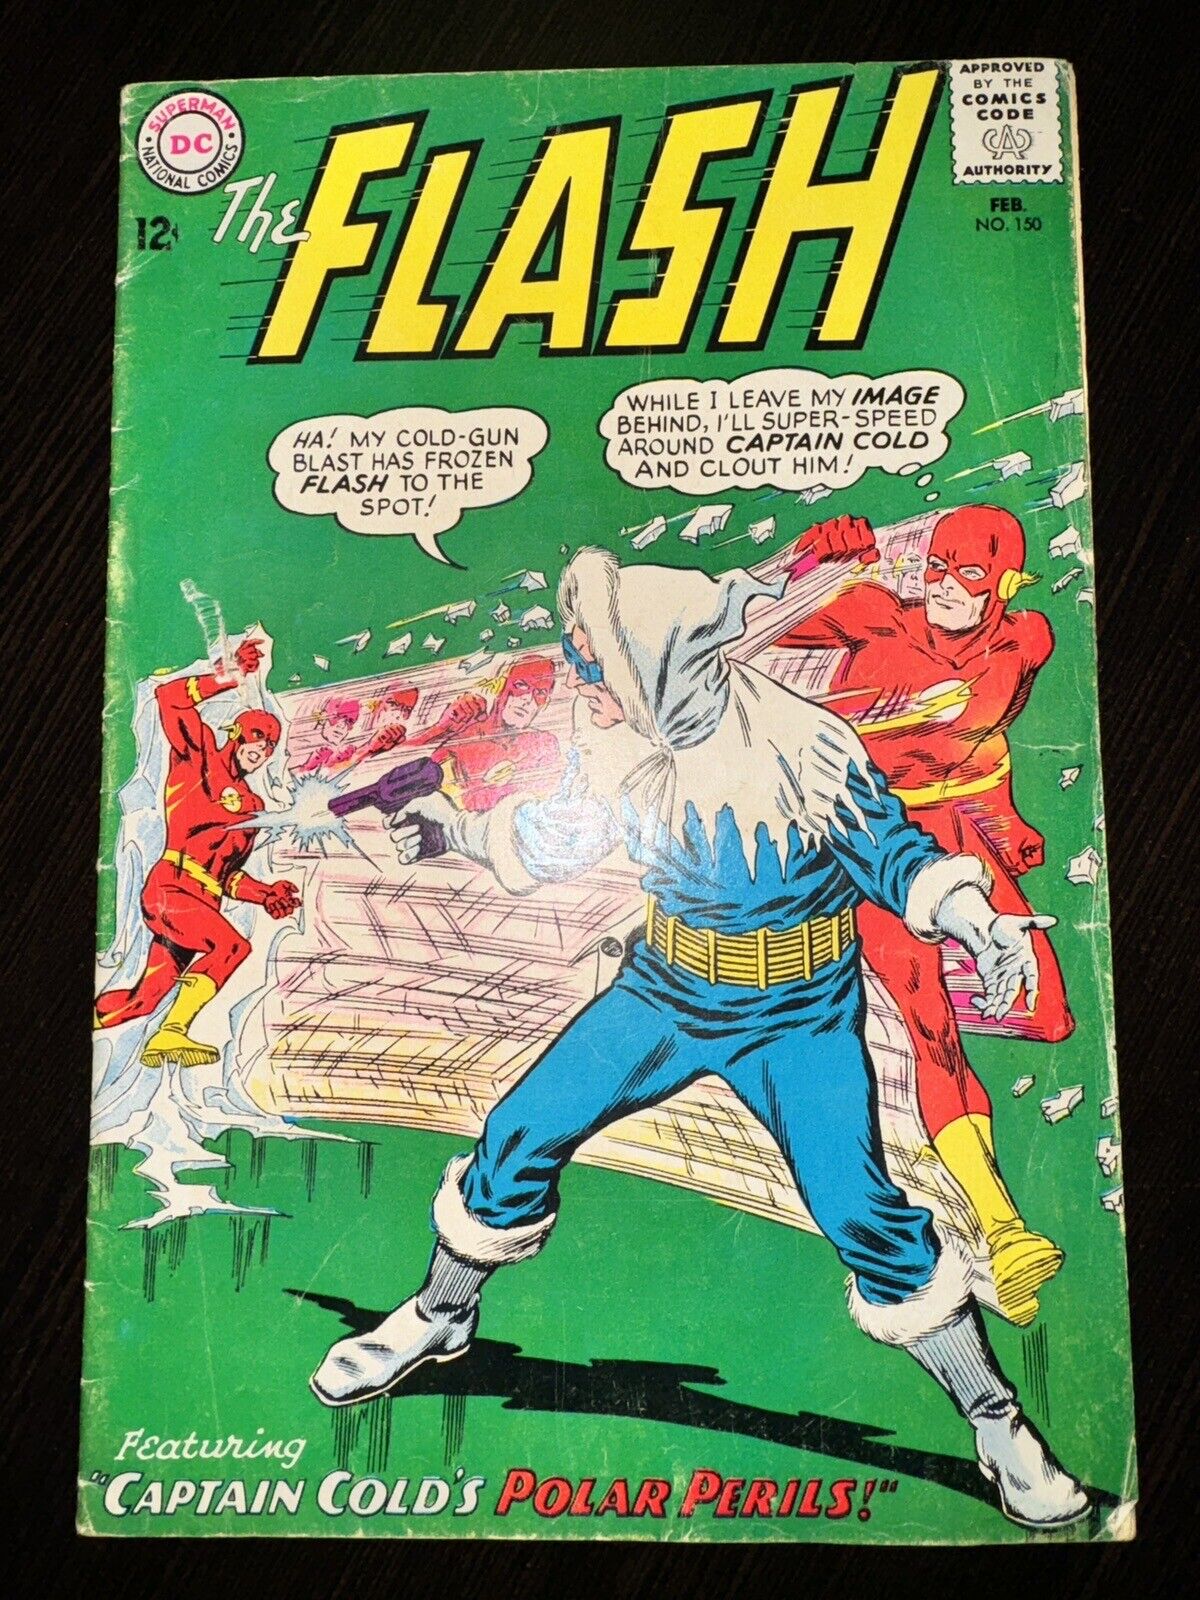 The Flash 150